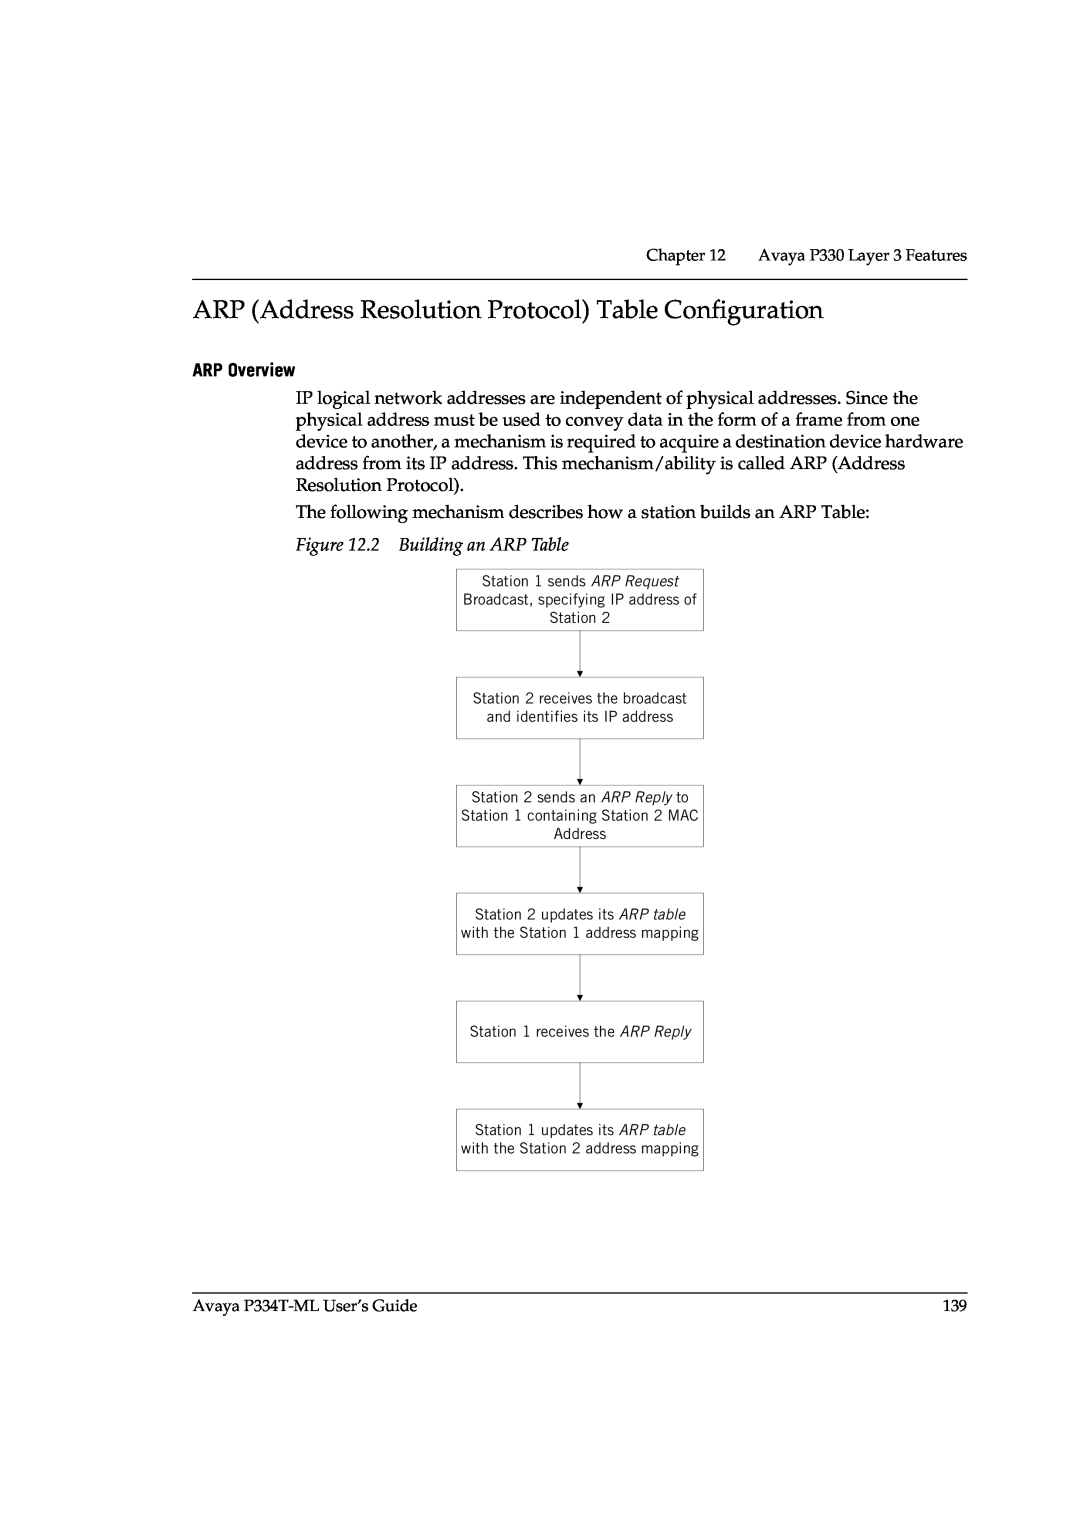 Avaya P3343T-ML manual ARP Address Resolution Protocol Table Configuration, ARP Overview 